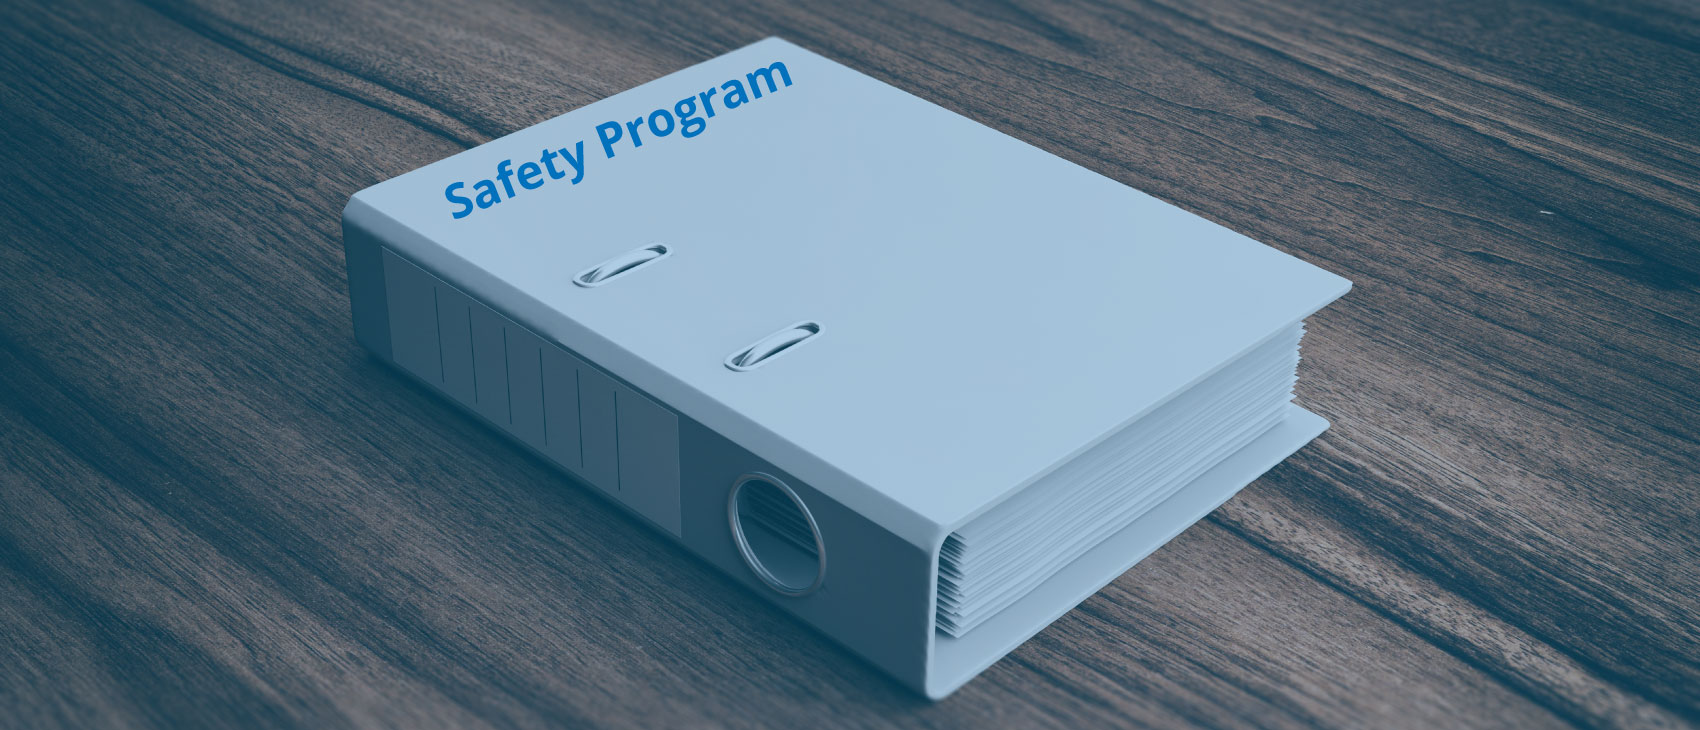 Safety program binder